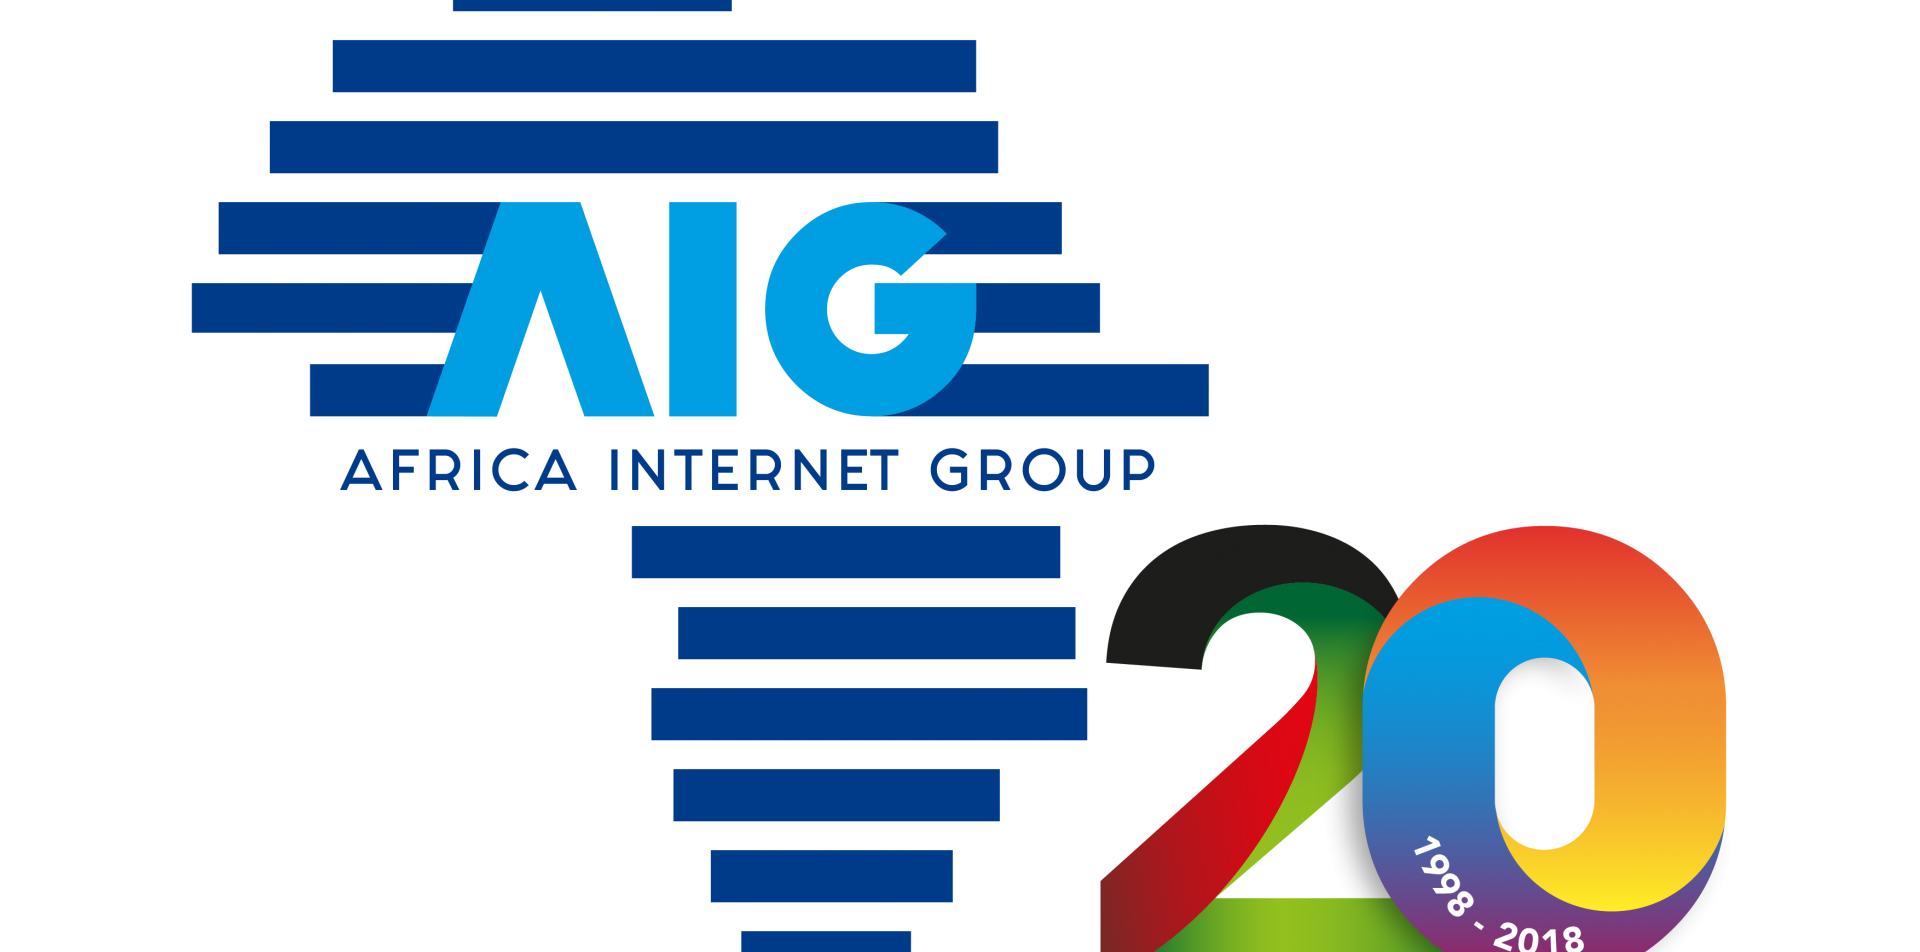 Africa Internet Group